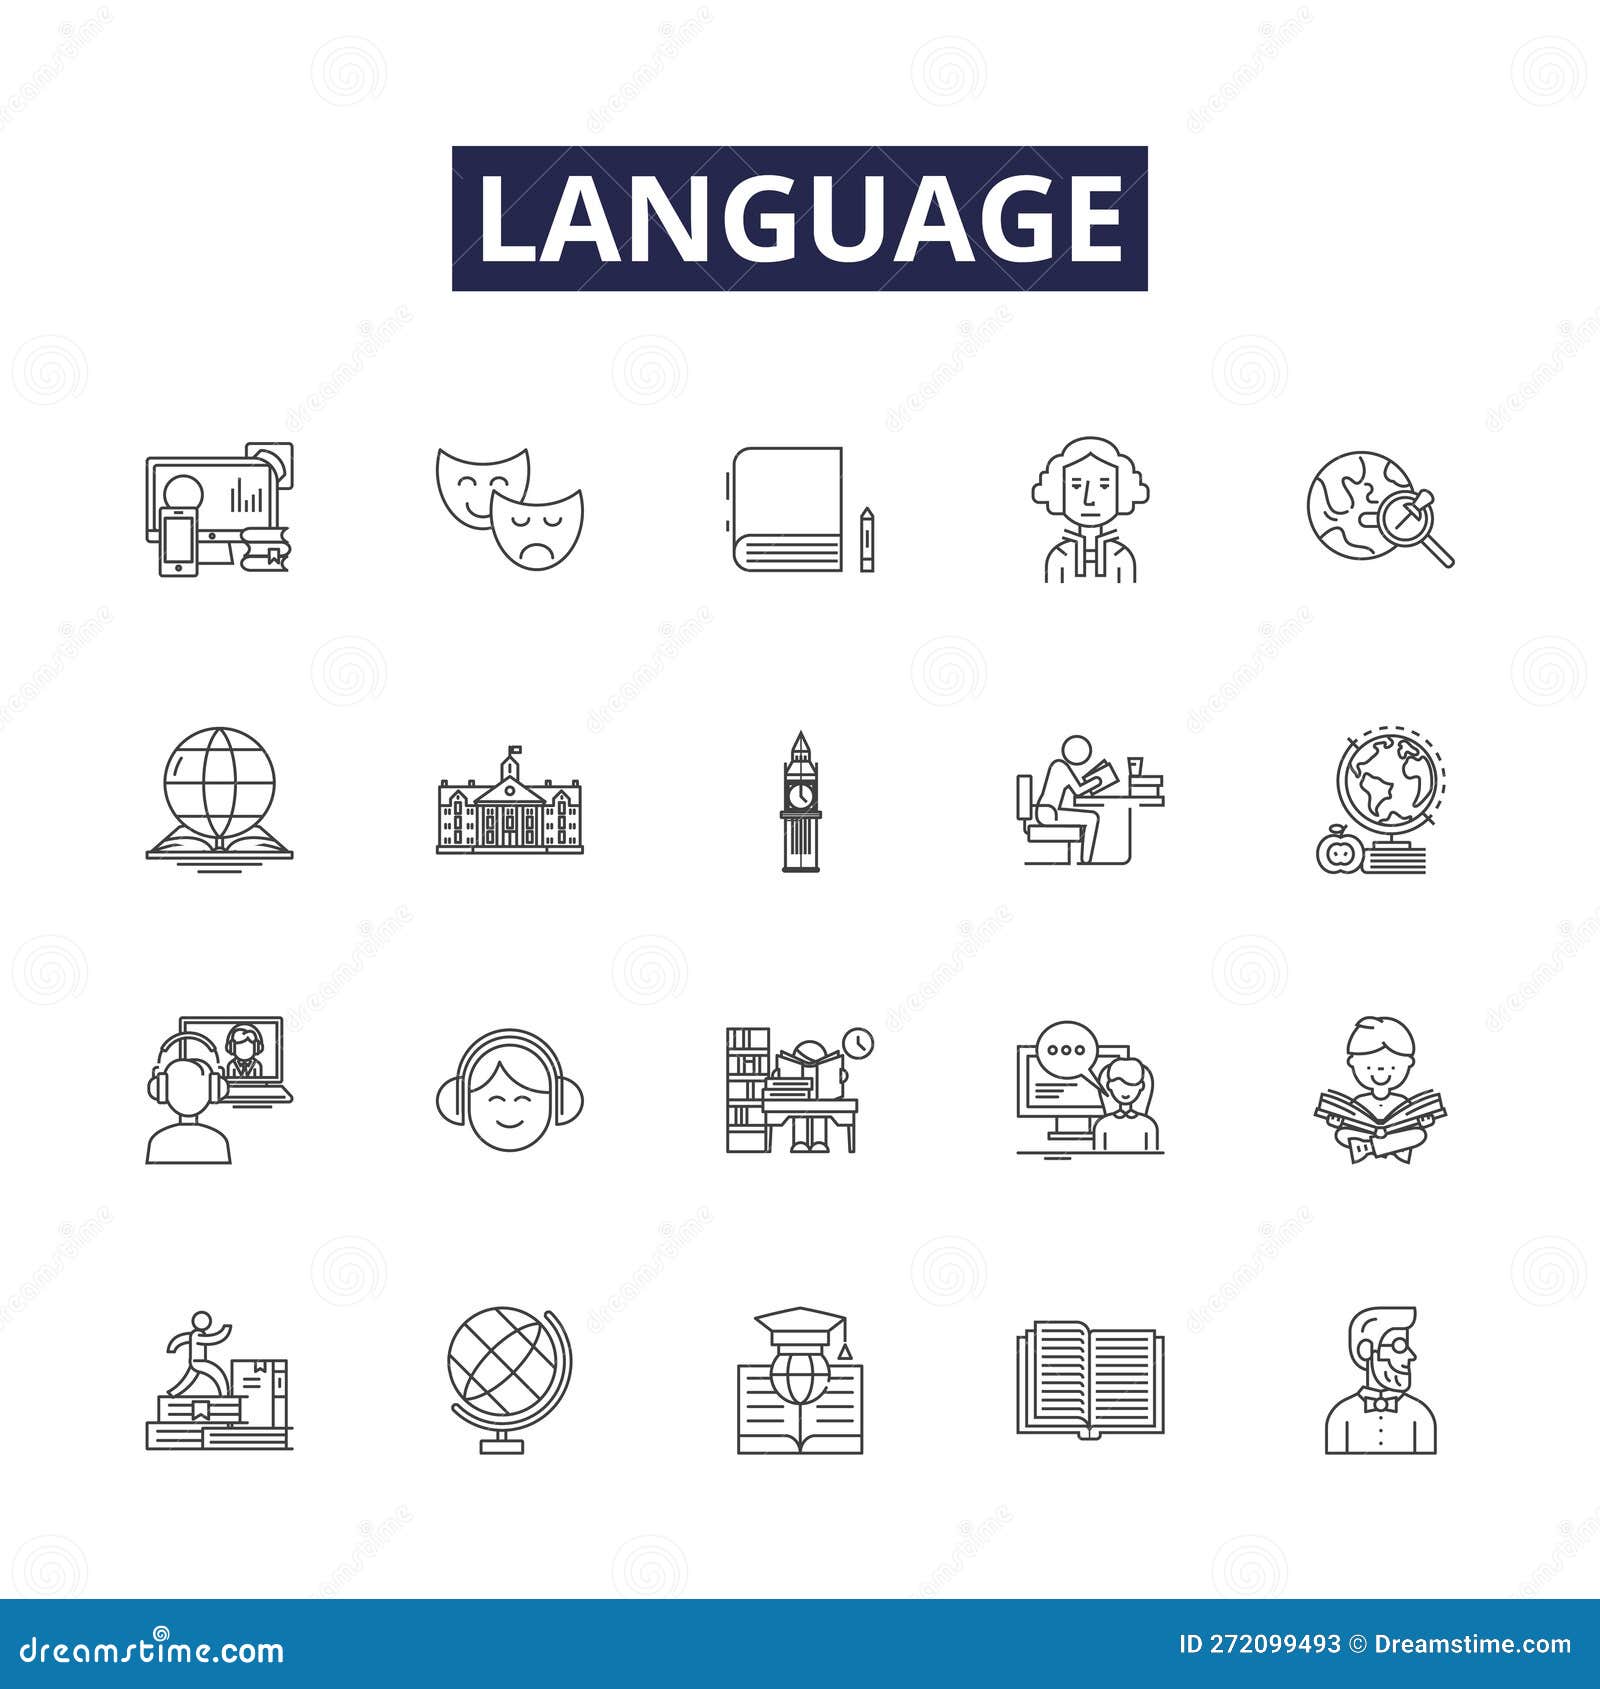 language line  icons and signs. language, verbal, vocabulary, dialect, lingual, grammar, semantics, communication